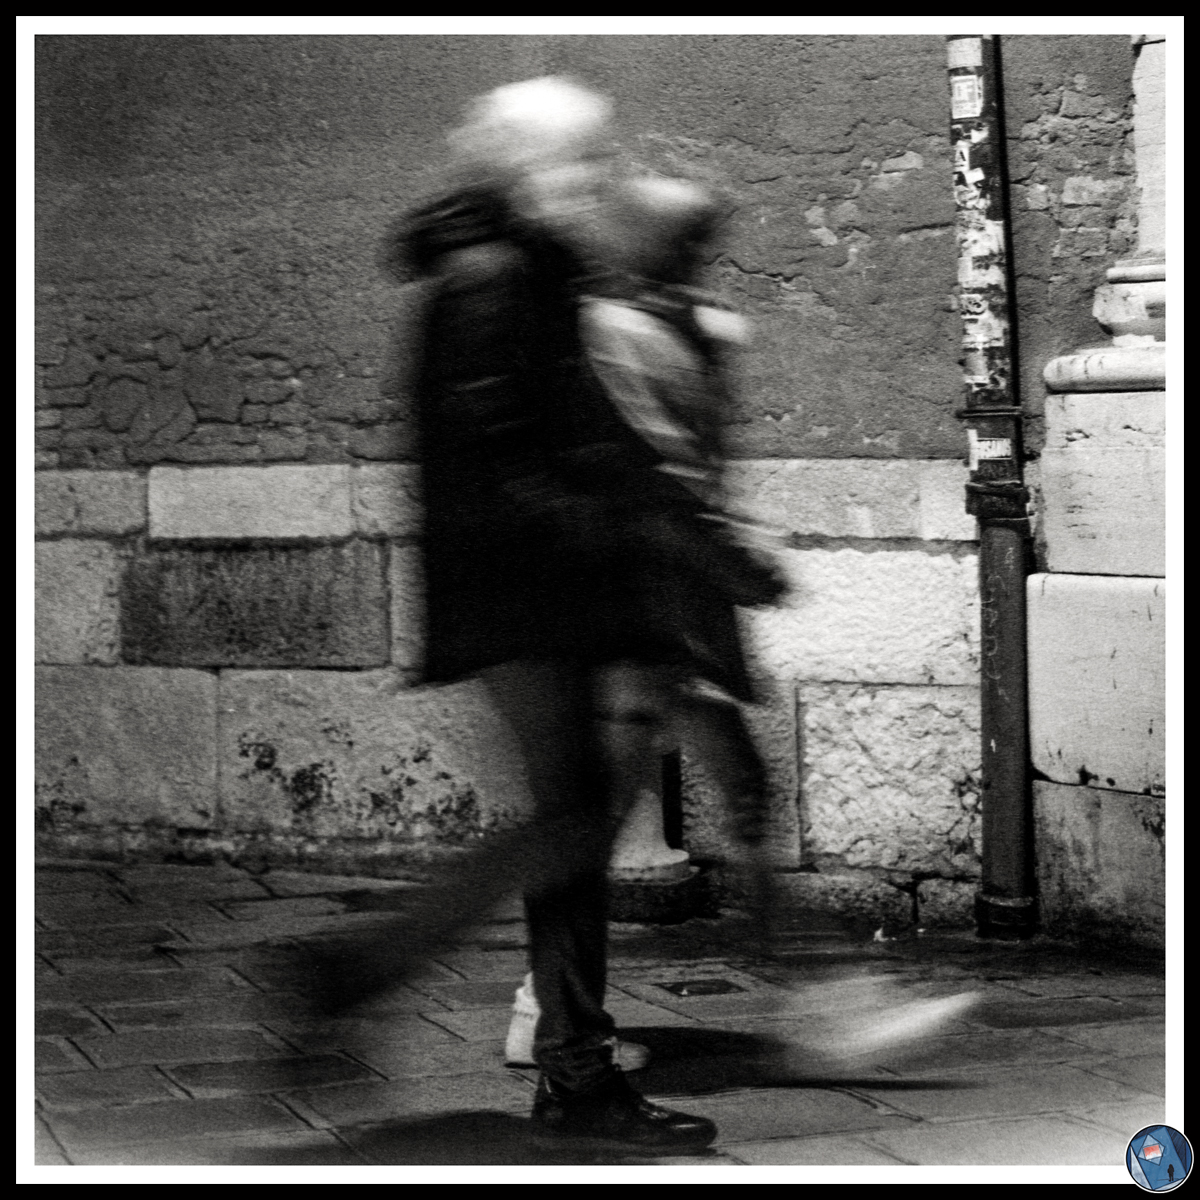 ___Harmless stuff___
+ Venice Walkers (night shot) +
.
#filmphotography
📷 #nikonfm2 
🎞 #35mmfilm #fomapan400 #fomapanfilm developed in #caffenol
.
#photography #streetphotography #fineart_photobw #fineartphotography #believeinfilm #filmisnotdead #blackandwhite #bnw_captures